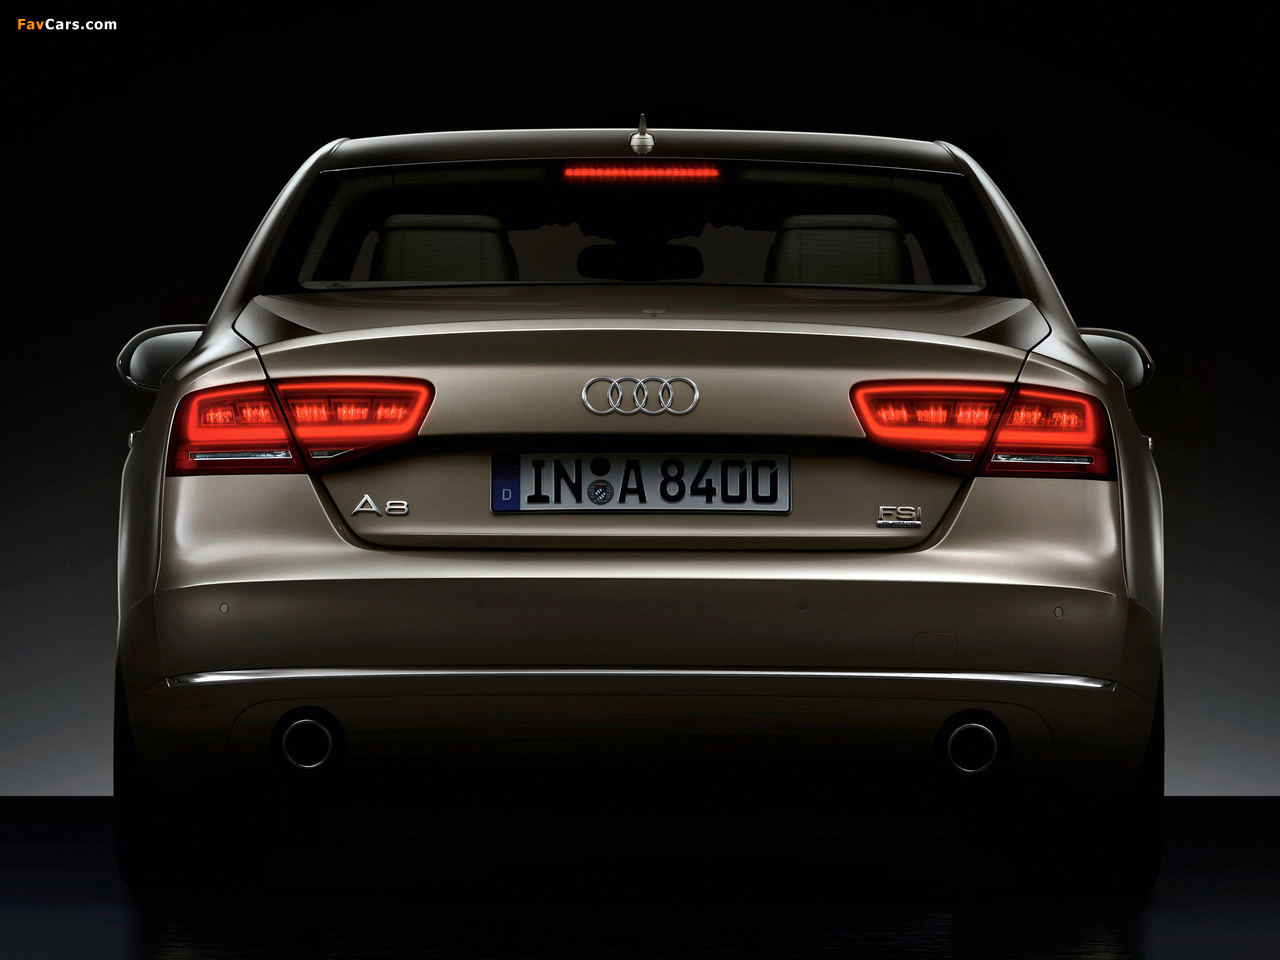 Audi A8 4.2 FSI quattro (D4) 2010 pictures (1280 x 960)